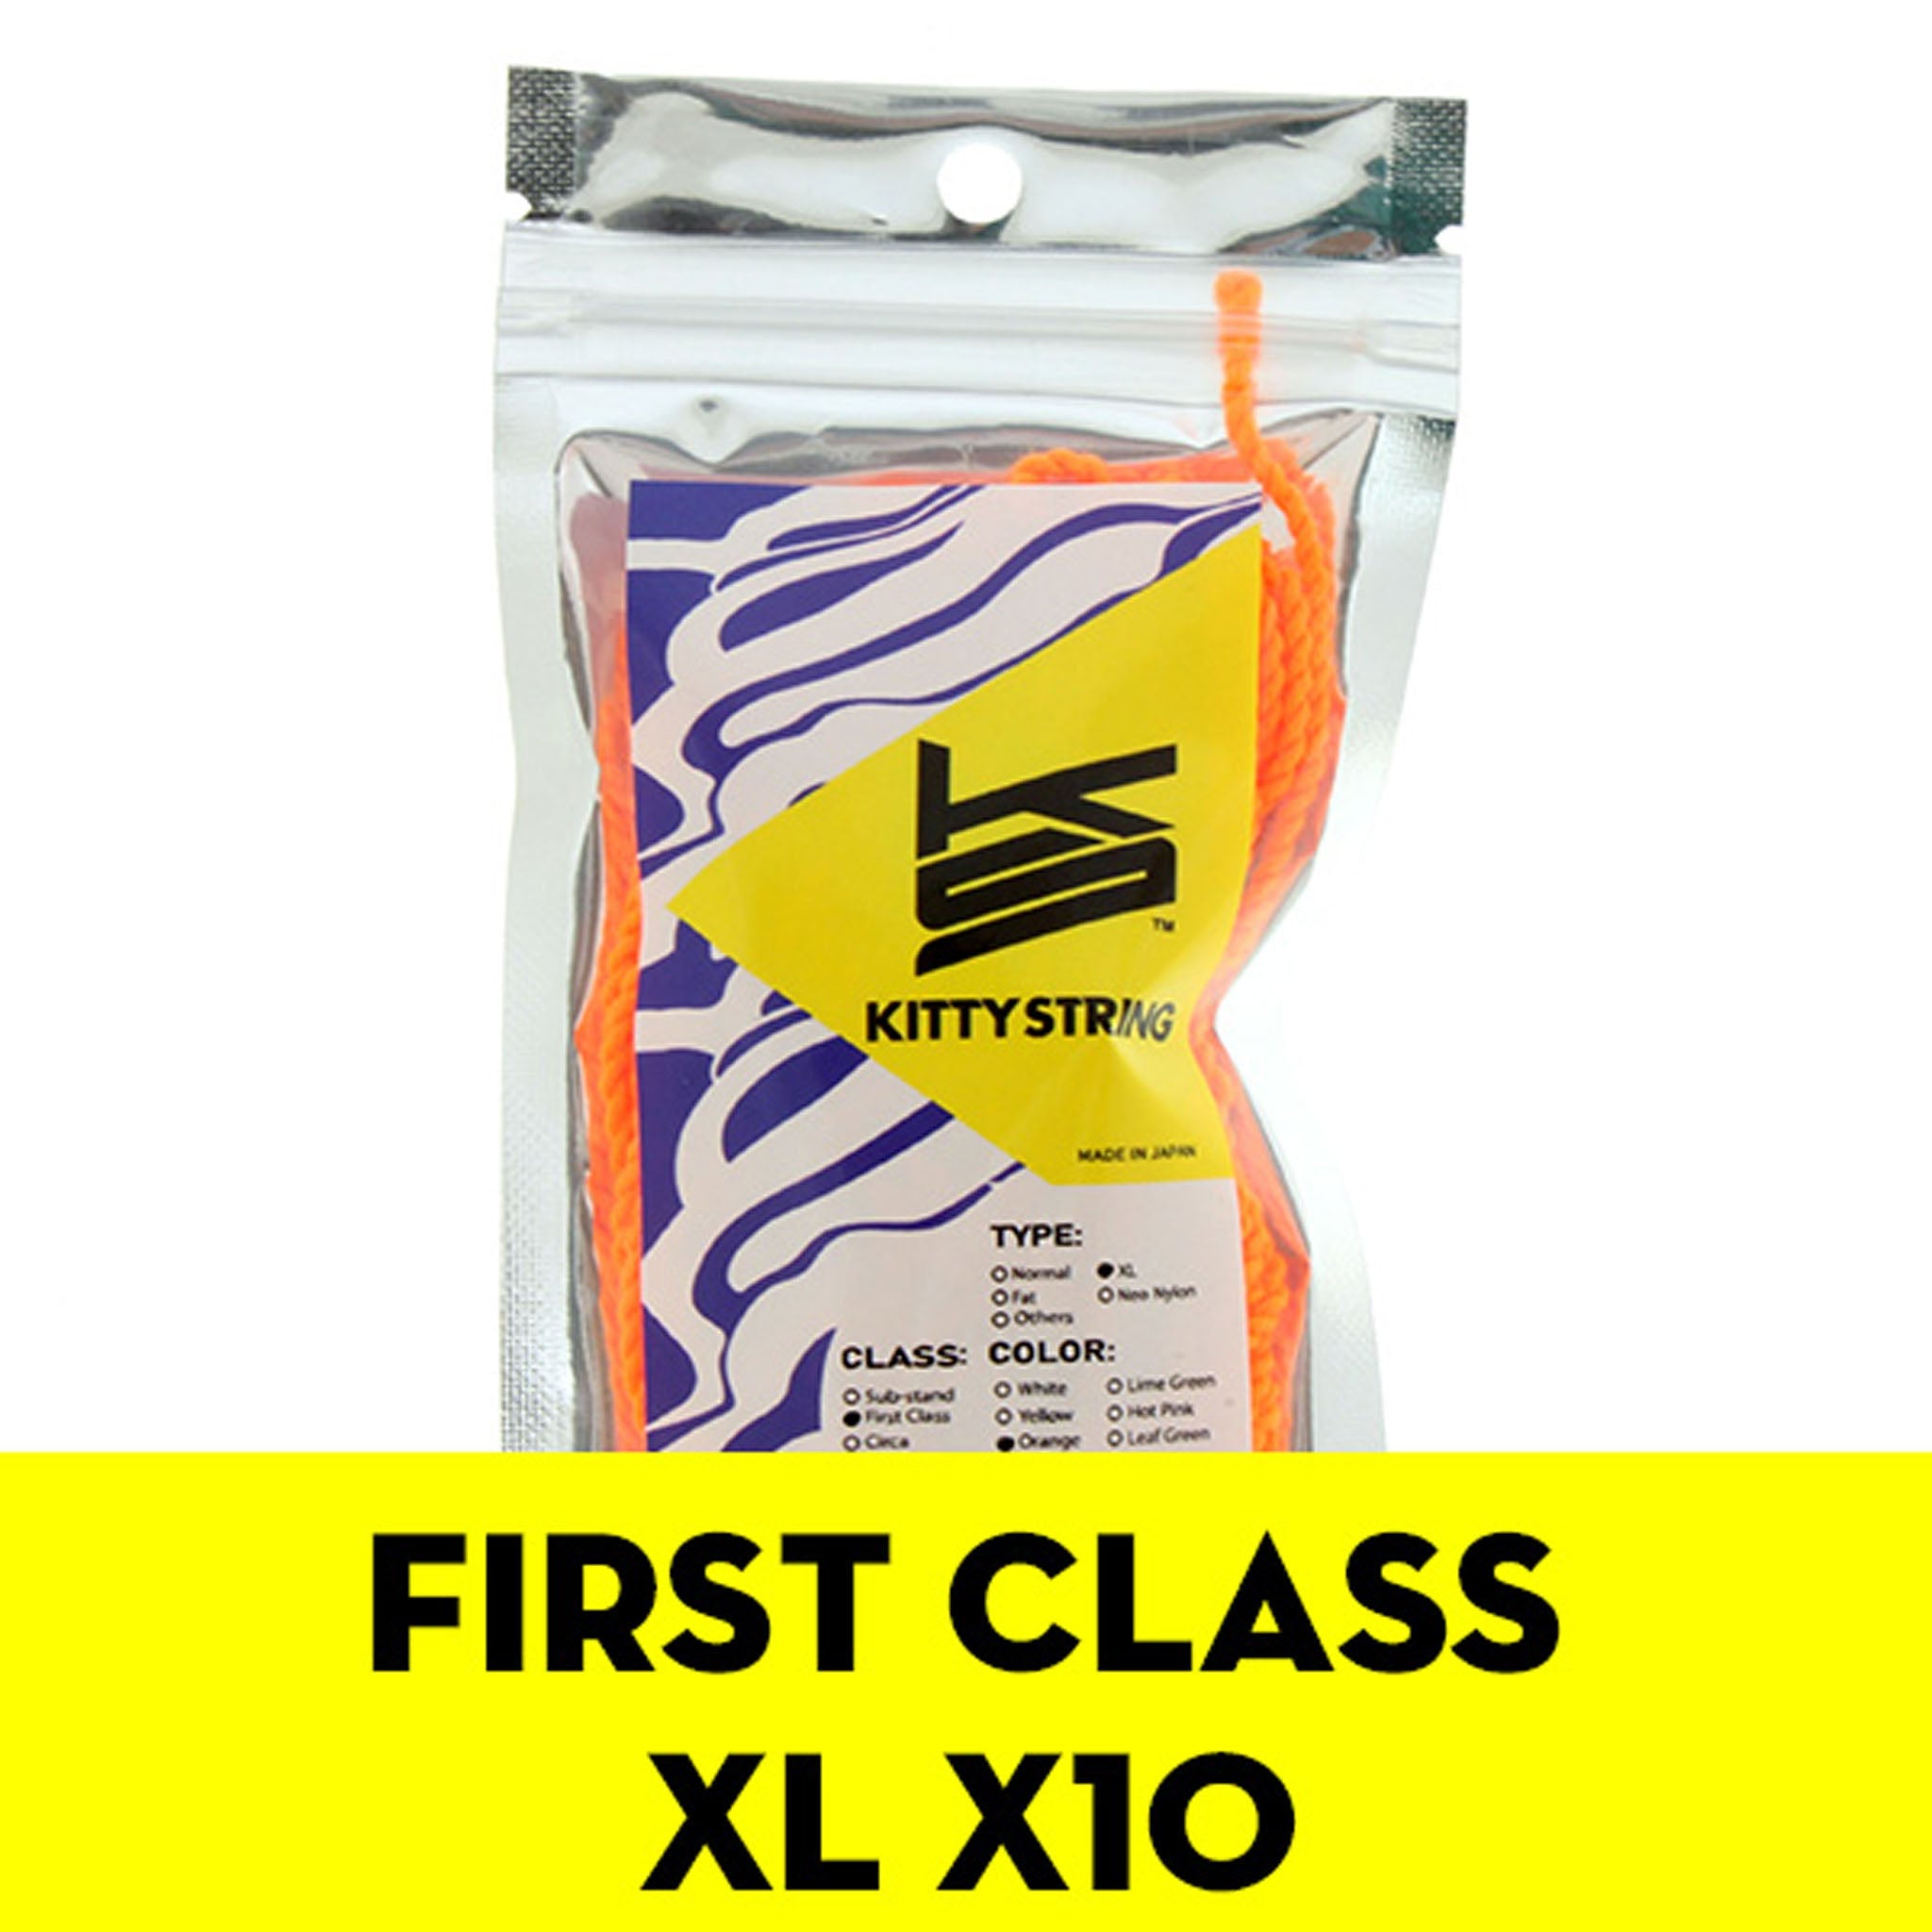 Kitty String (Poly100%) "First-Class" XL x10